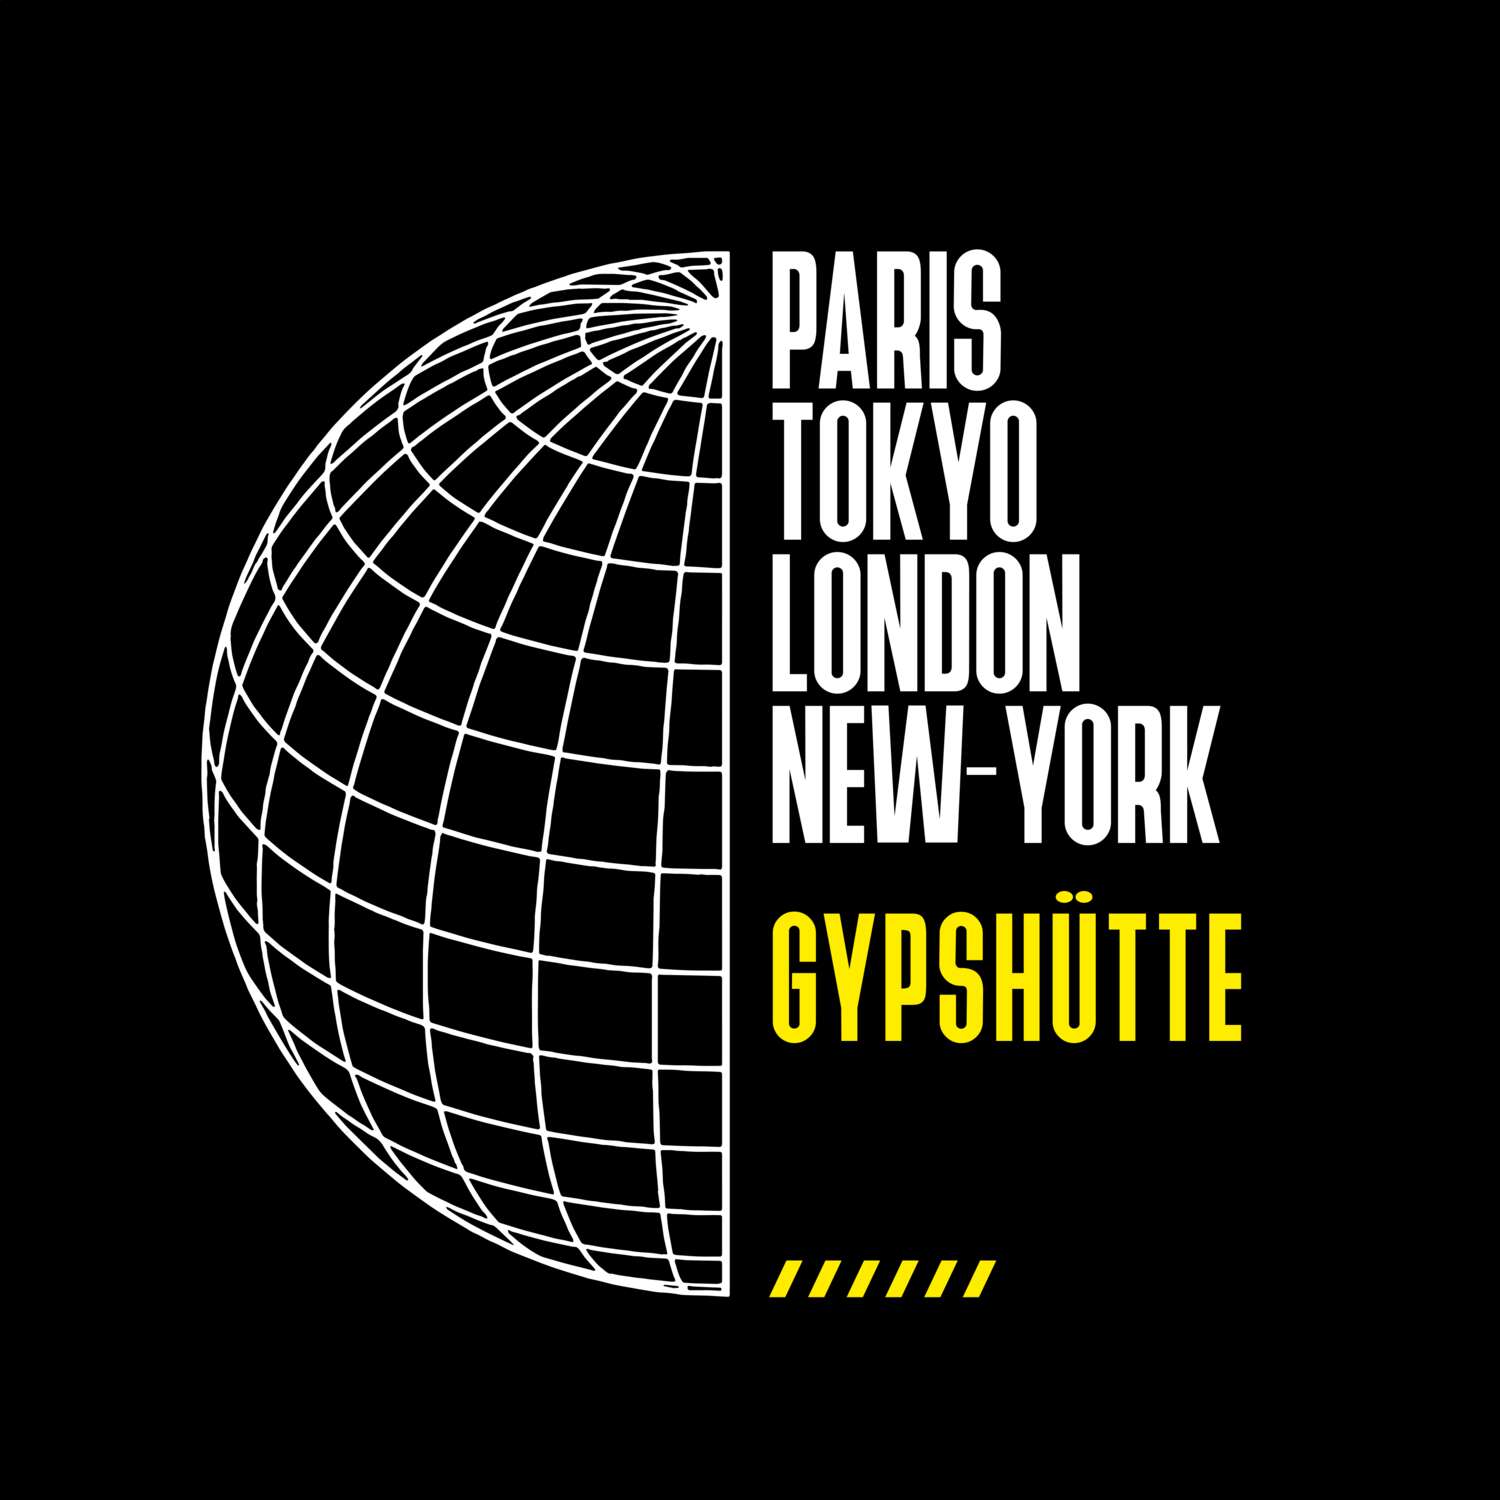 Gypshütte T-Shirt »Paris Tokyo London«